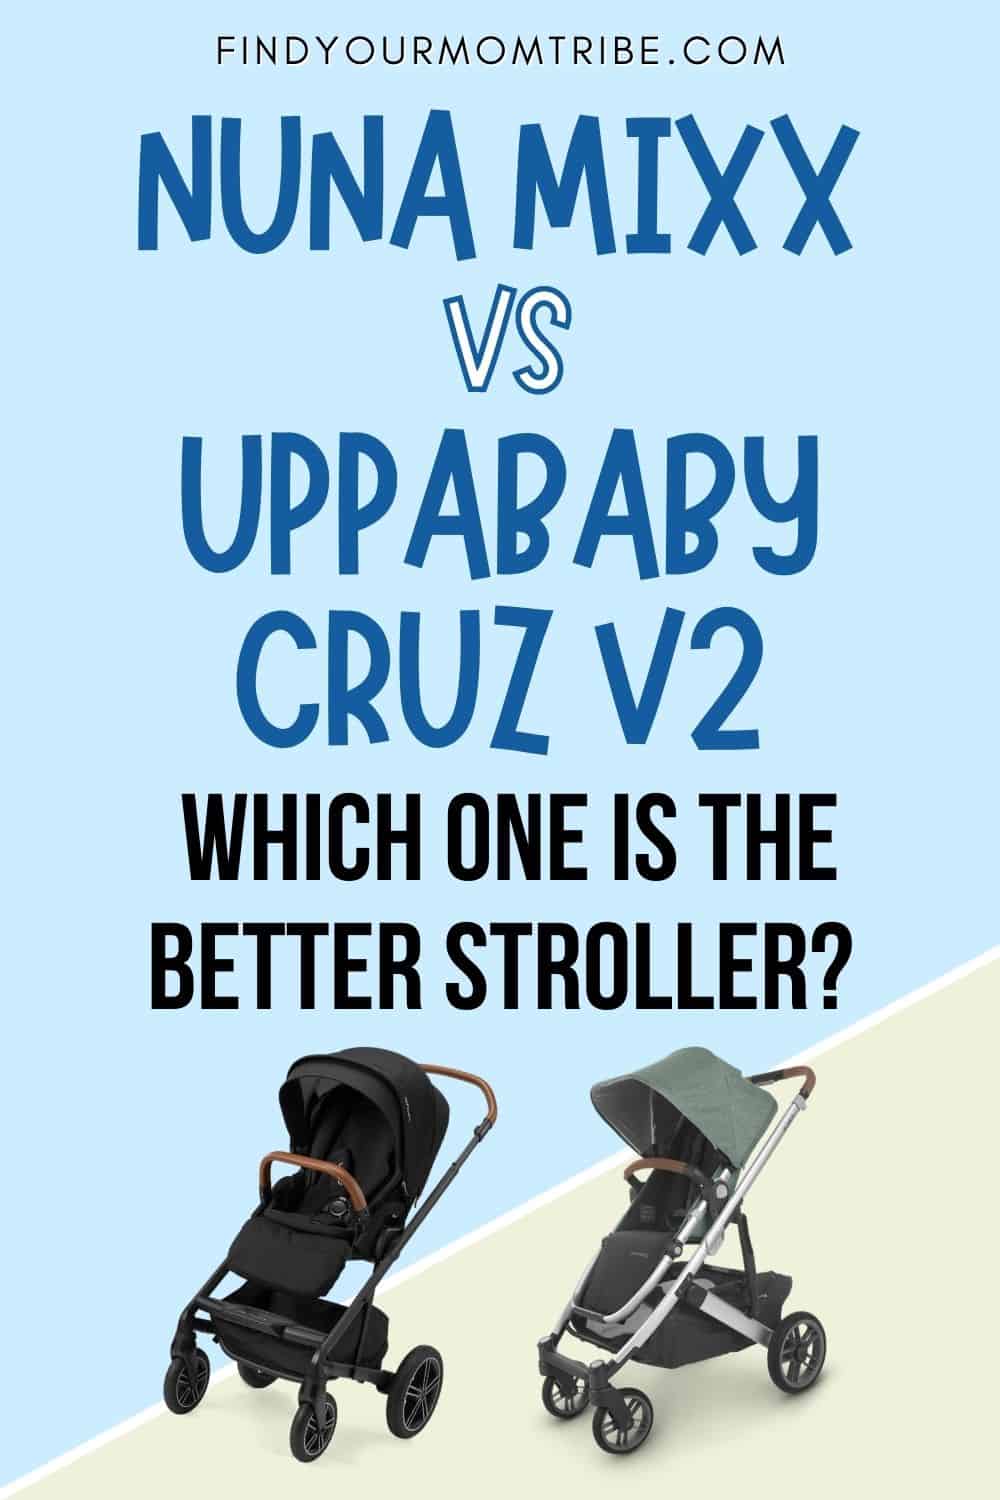 Nuna Mixx VS Uppababy Cruz V2